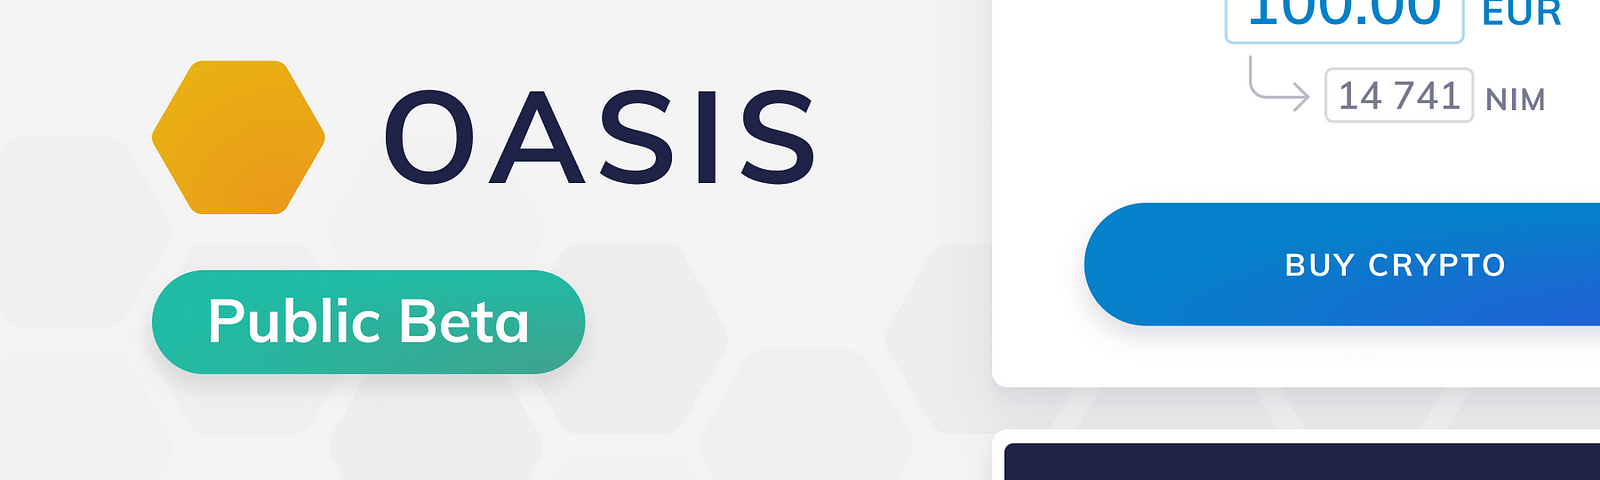 Bitcoin Oasis Network árfolyam